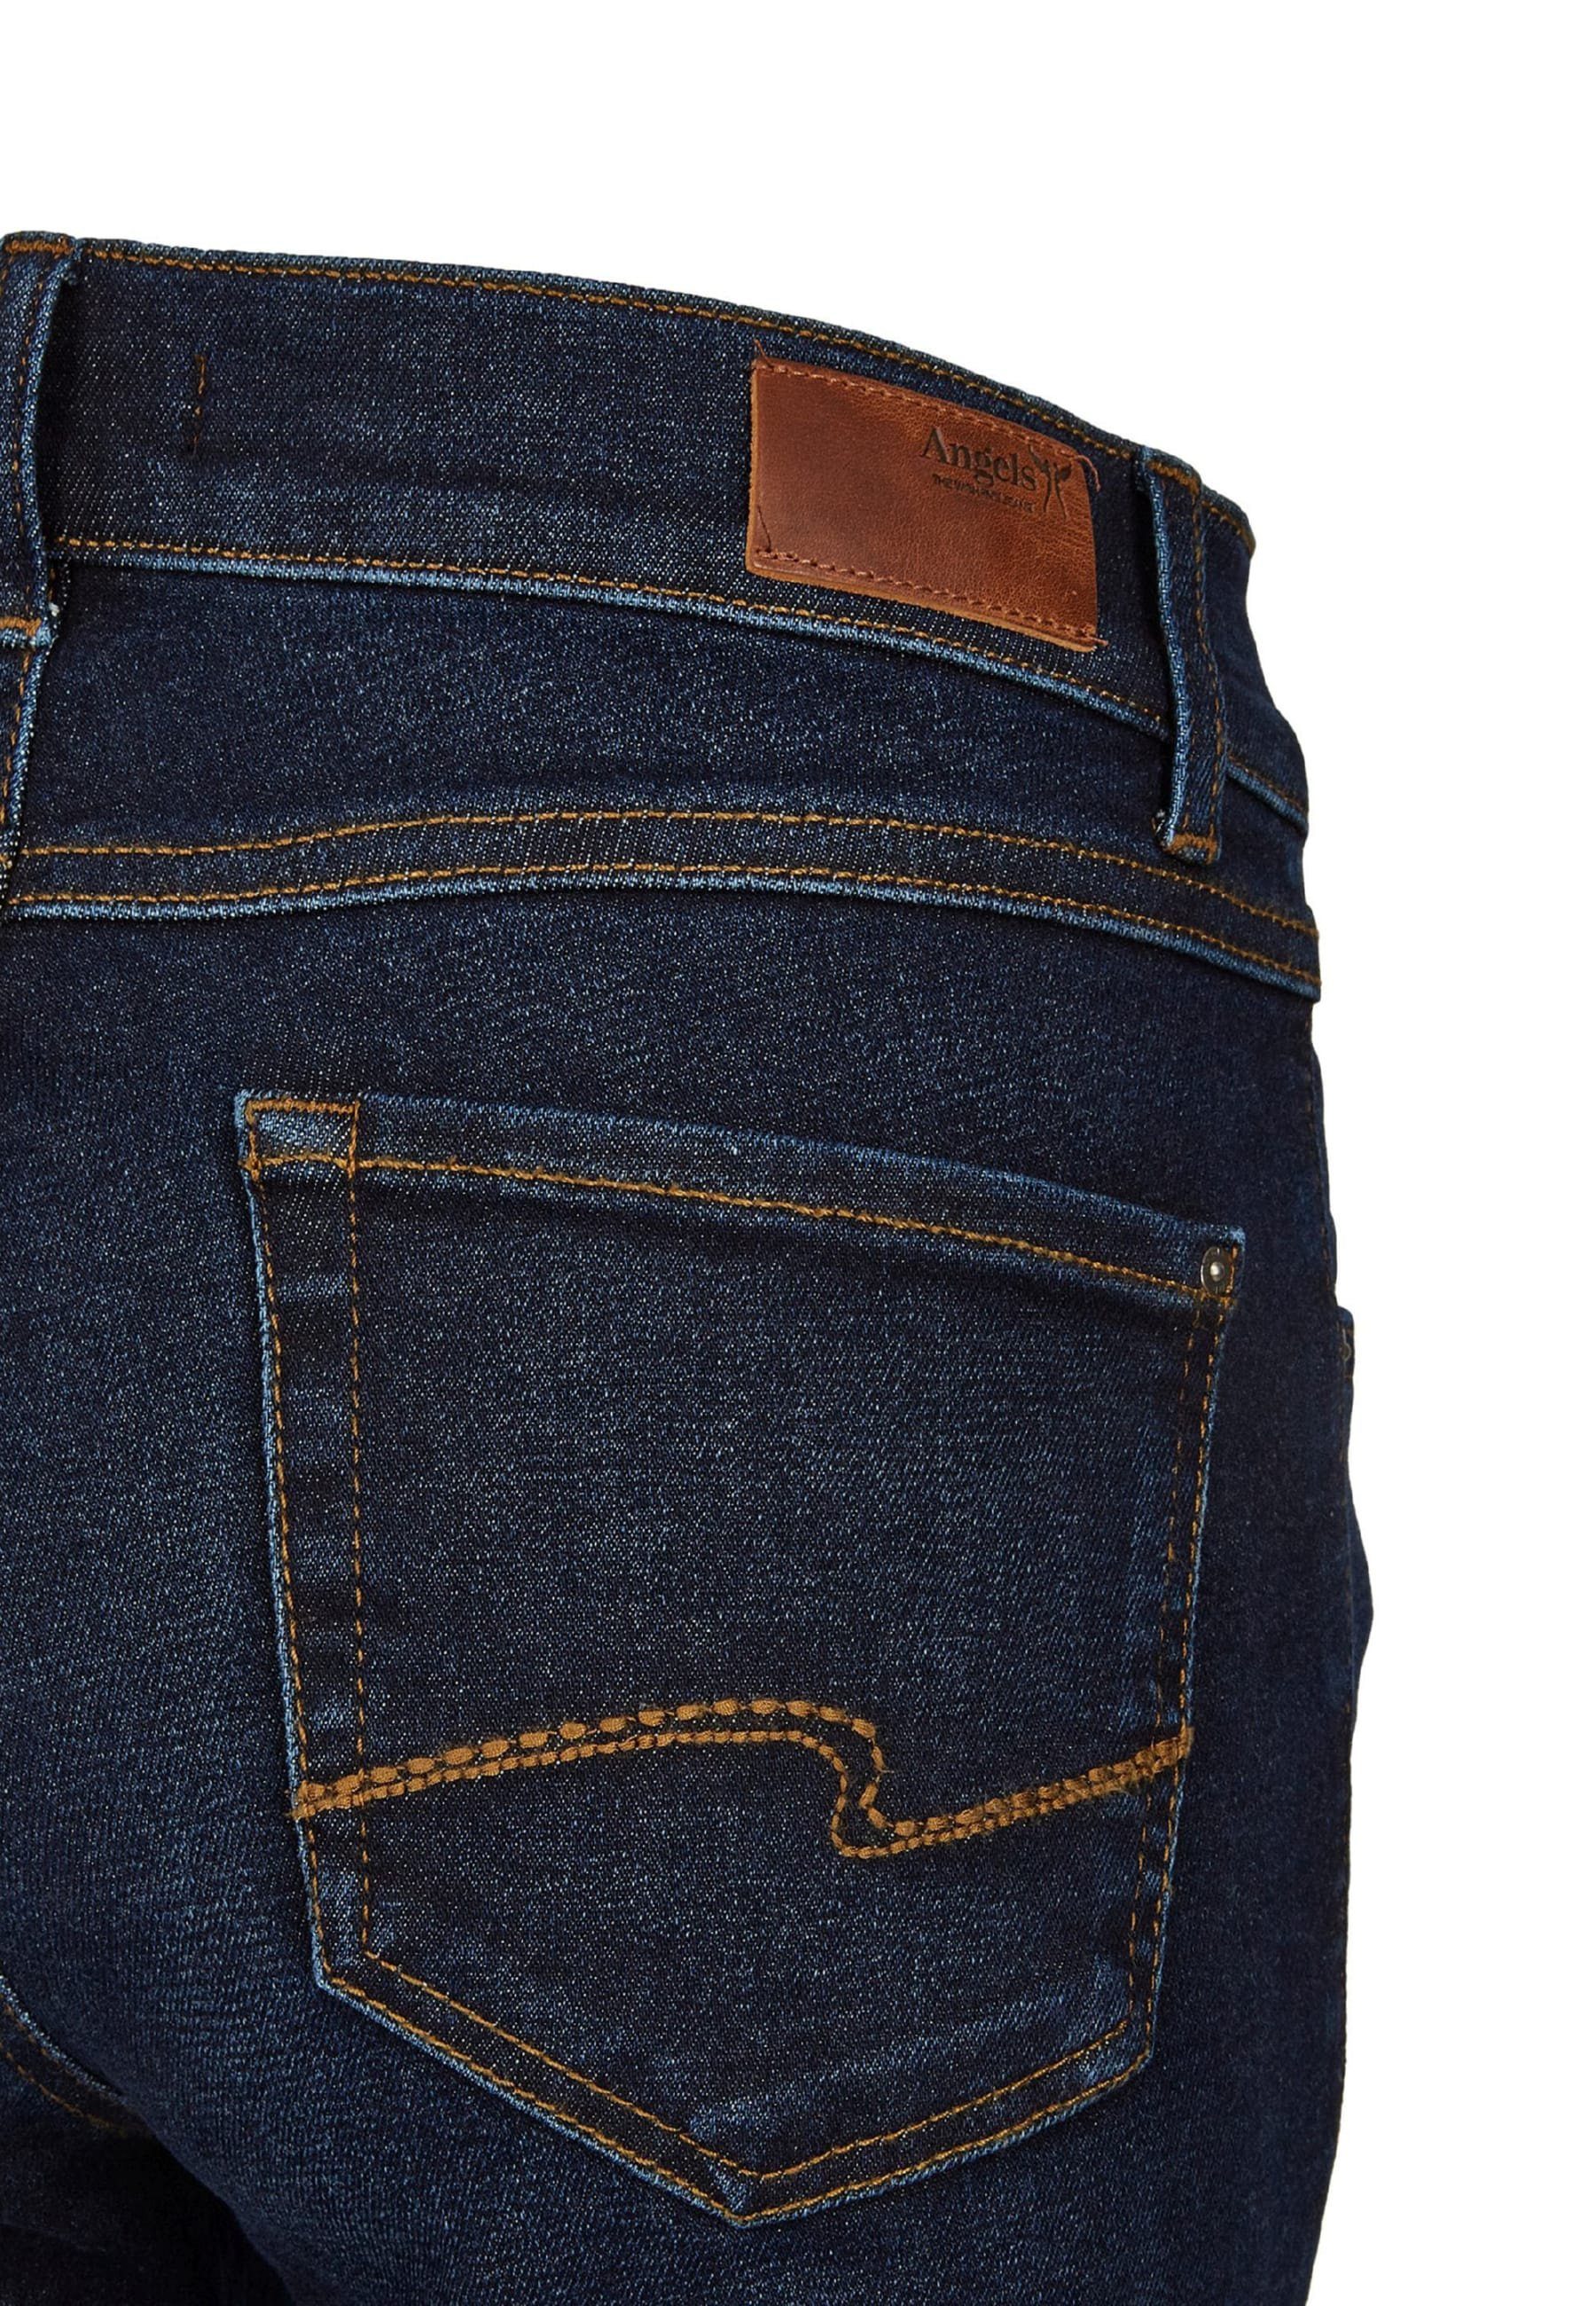 mit Used-Waschung Cici ANGELS mit indigo Jeans Label-Applikationen Straight-Jeans